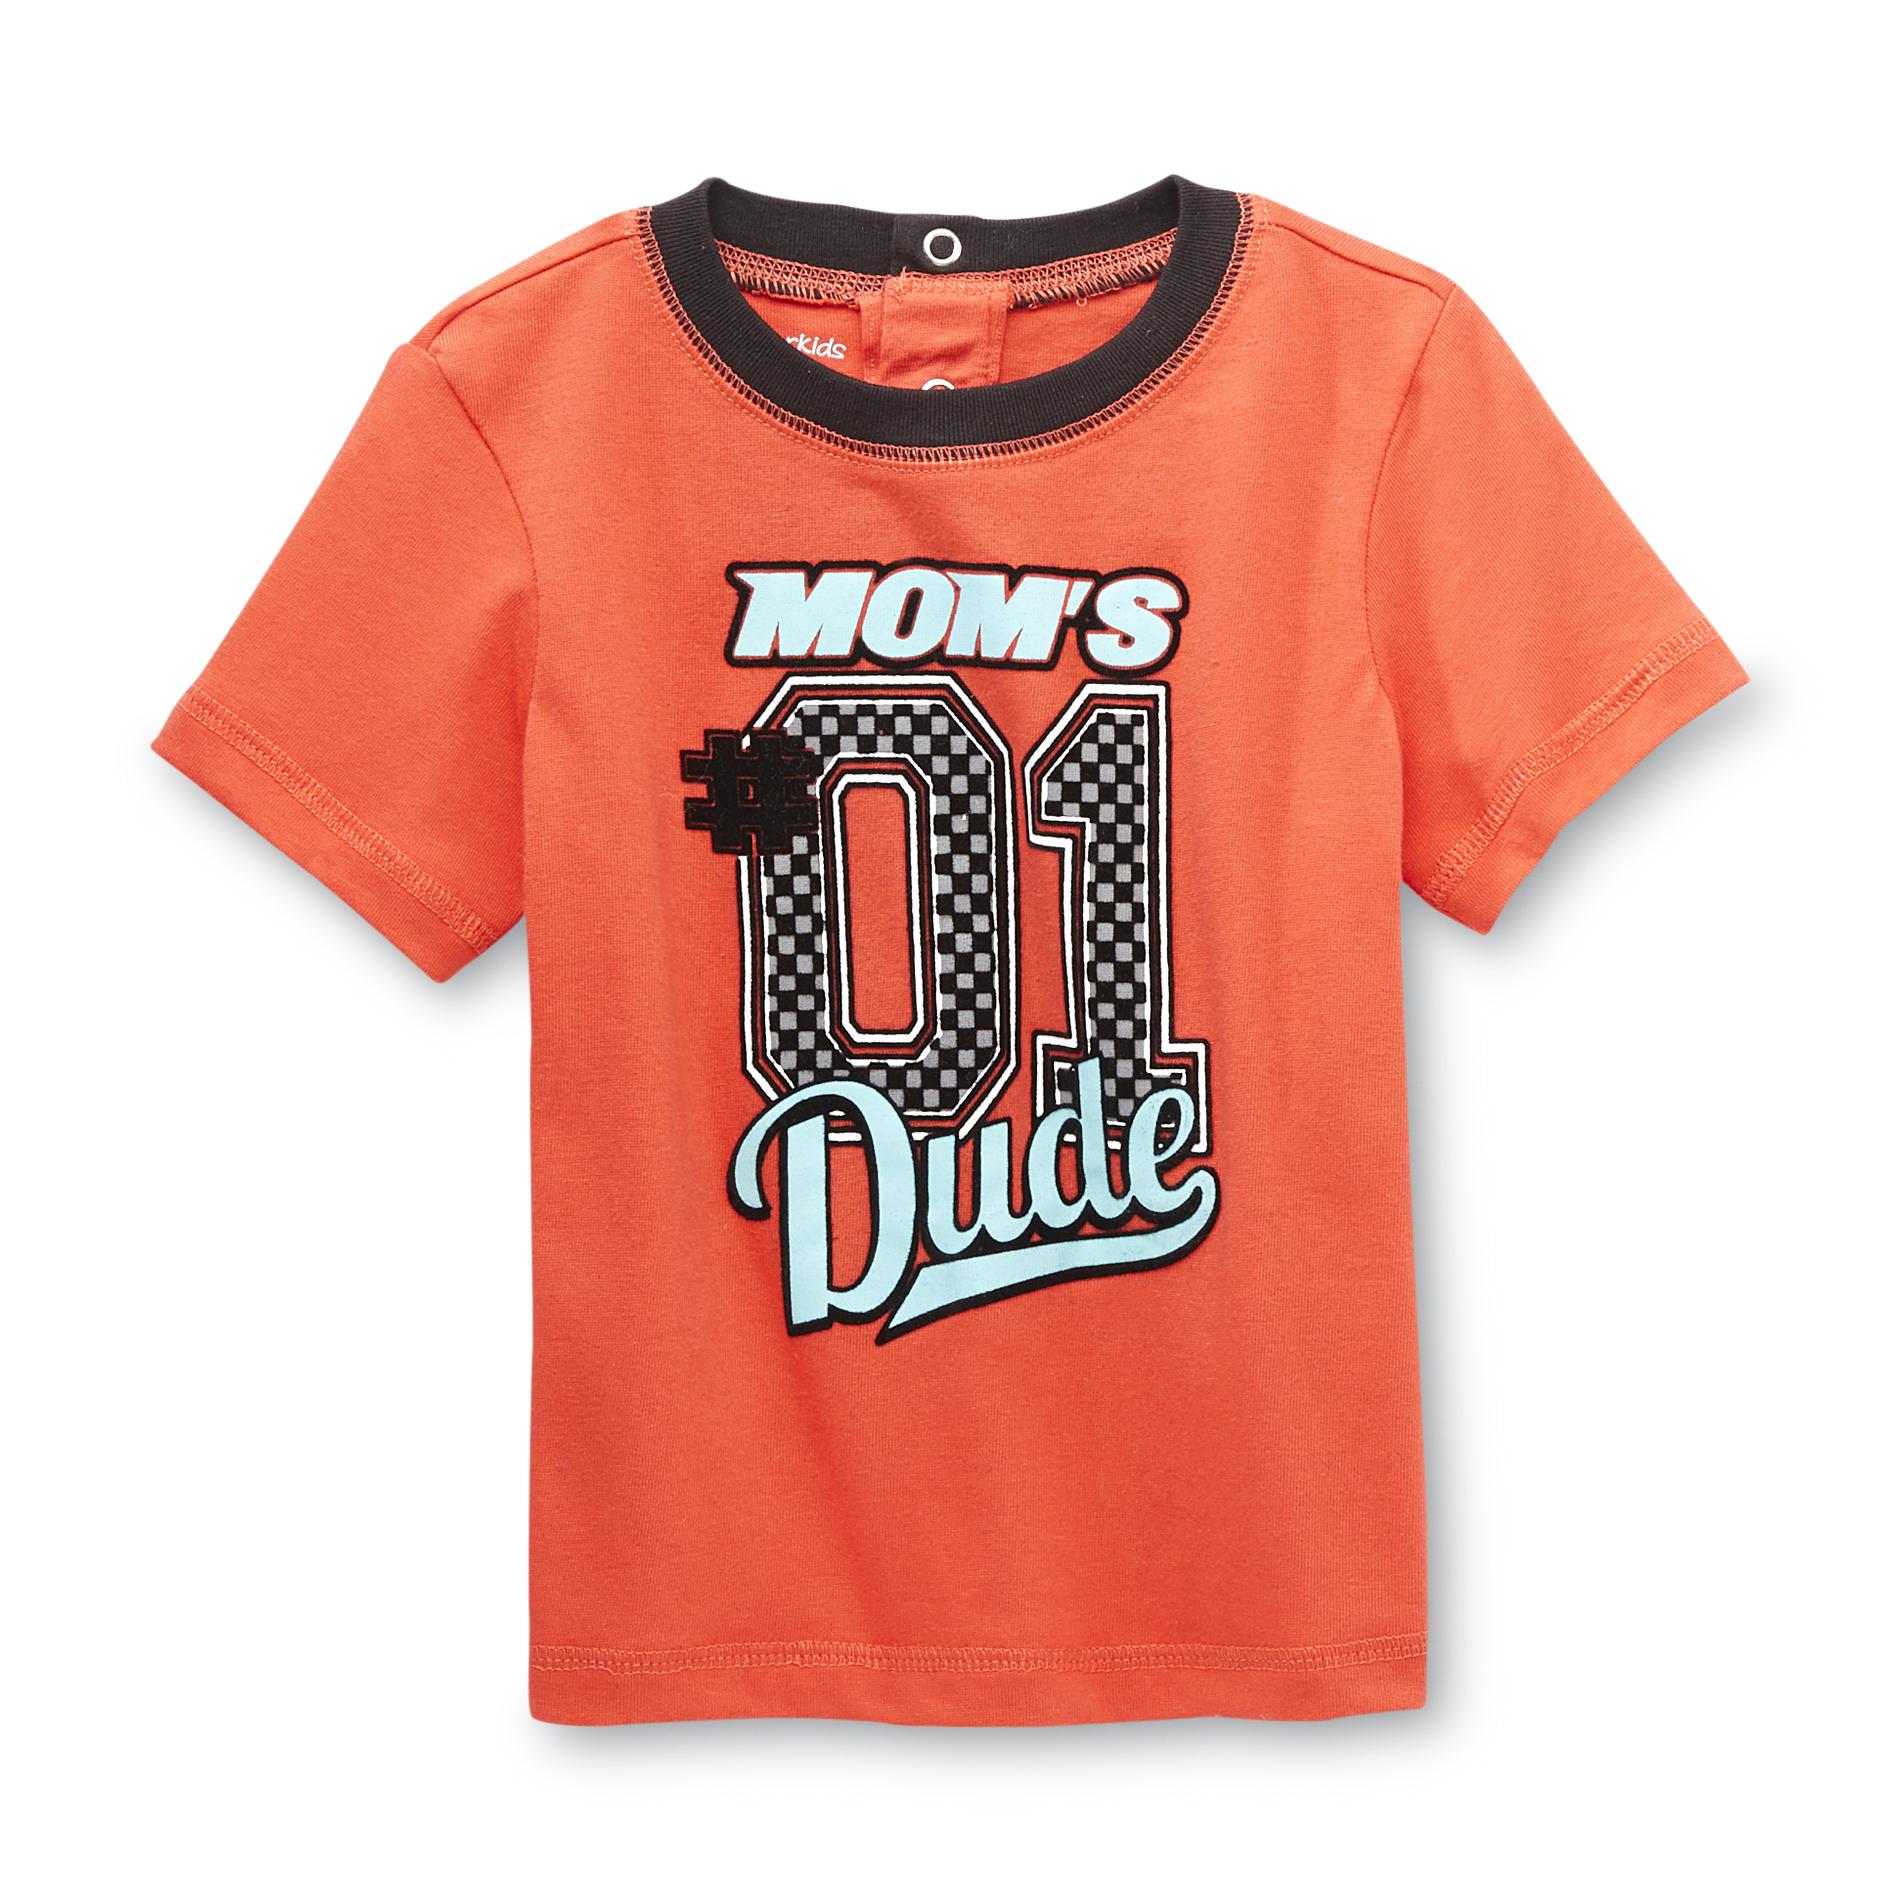 WonderKids Infant & Toddler Boy's Shirt - Mom's #01 Dude